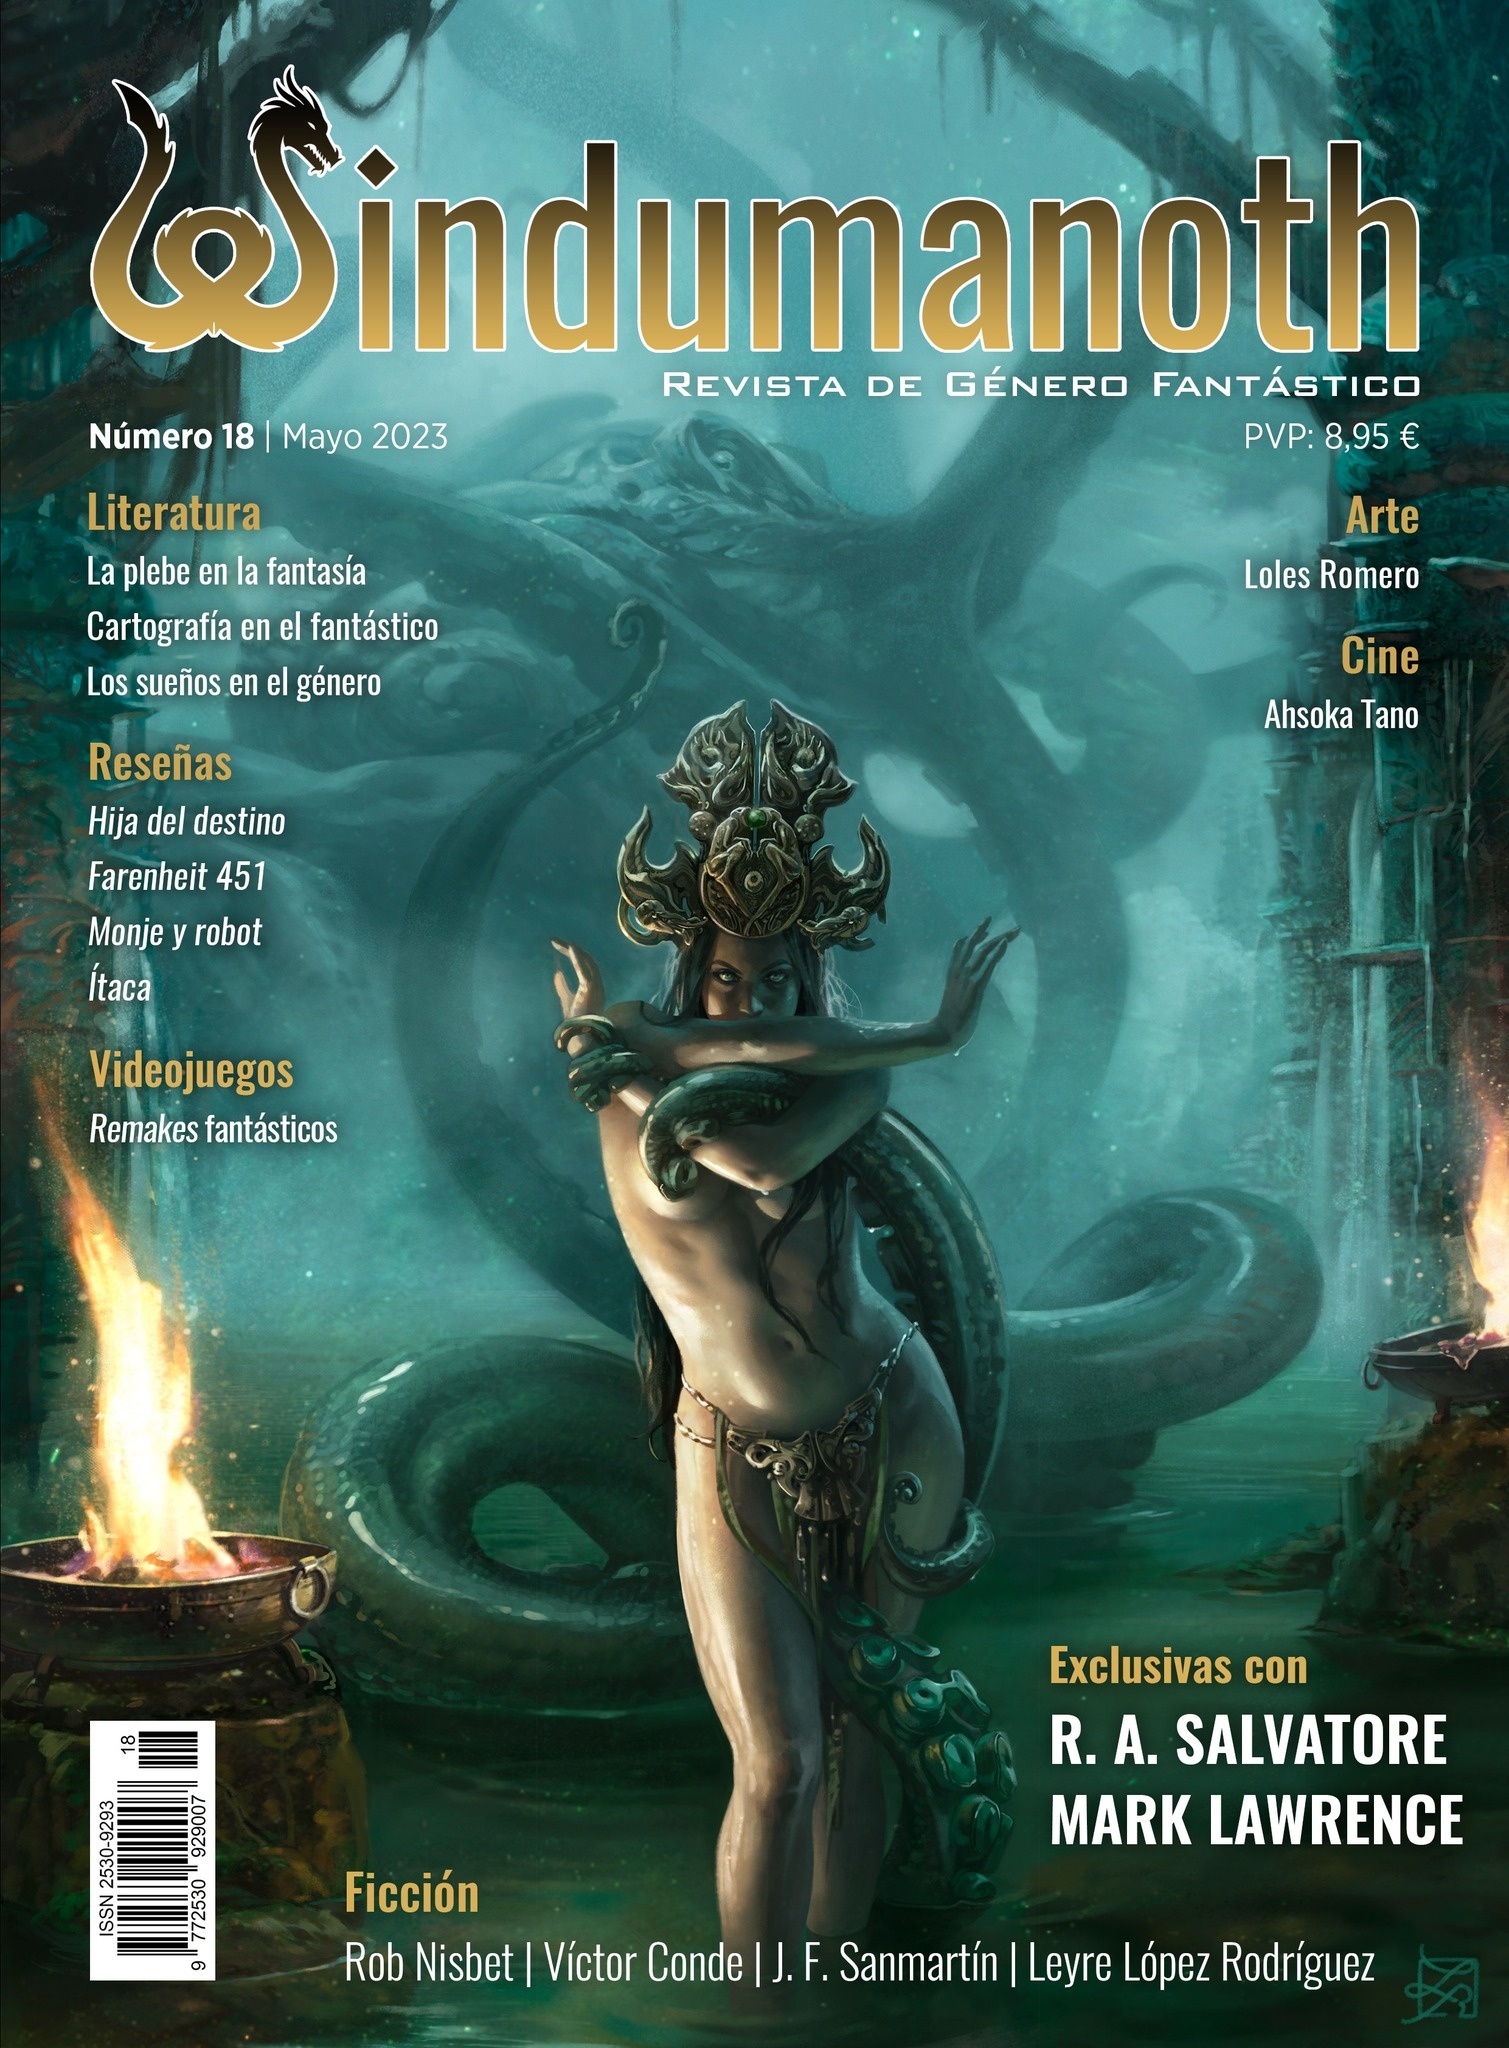 Windumanoth nº 18. Junio 2023 "Revista de género fantástico". 